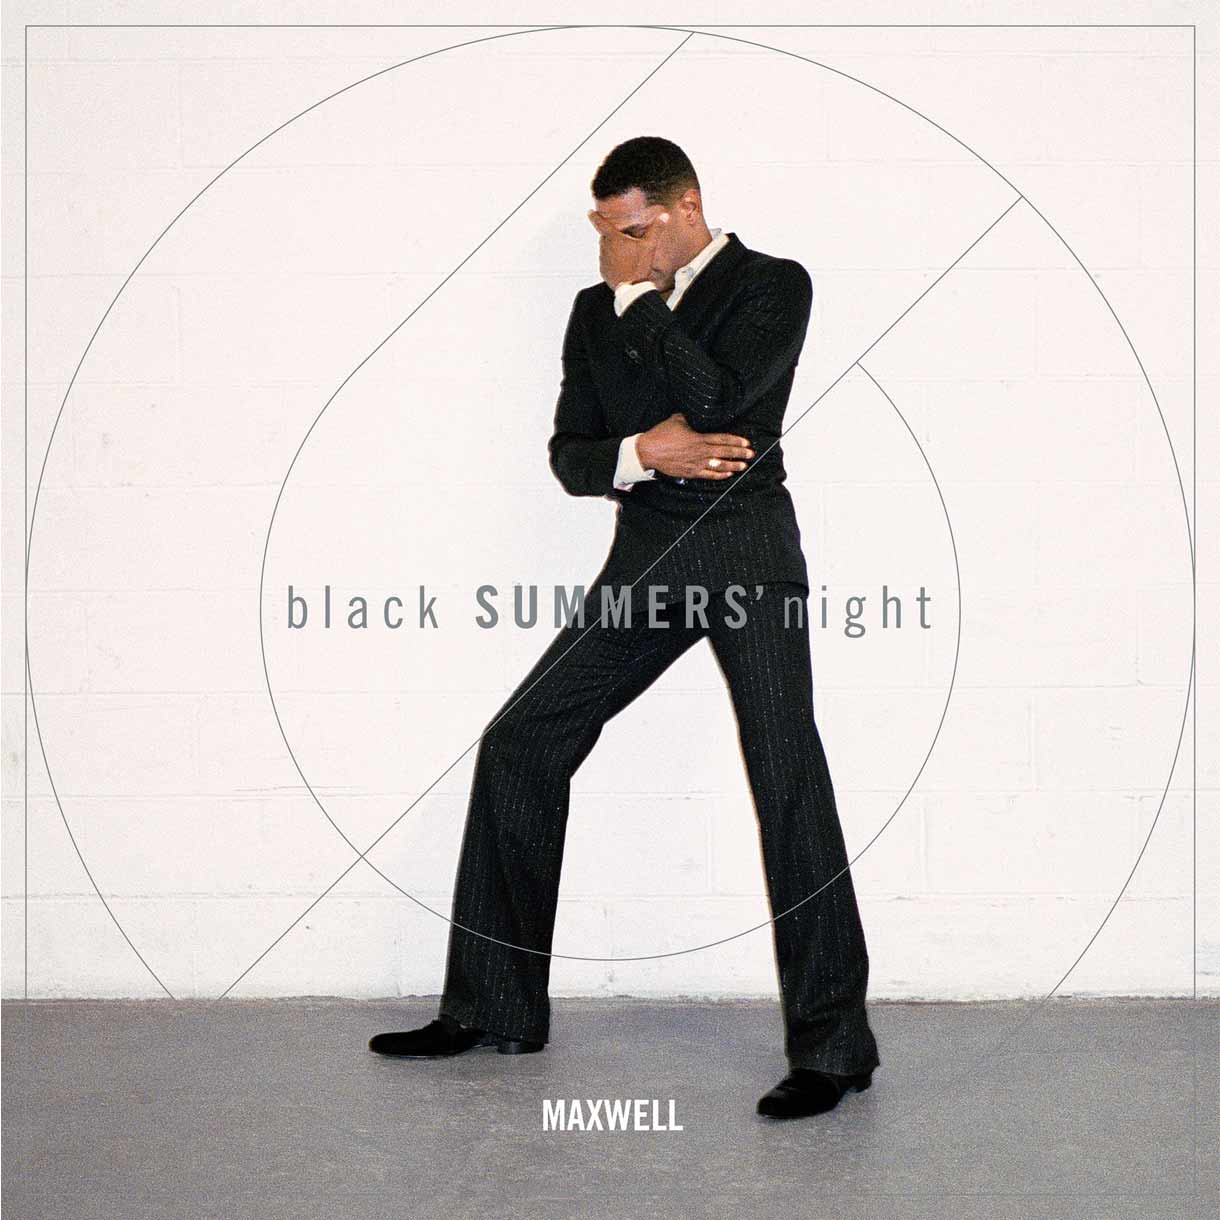 MAXWELL "black SUMMERS' night"